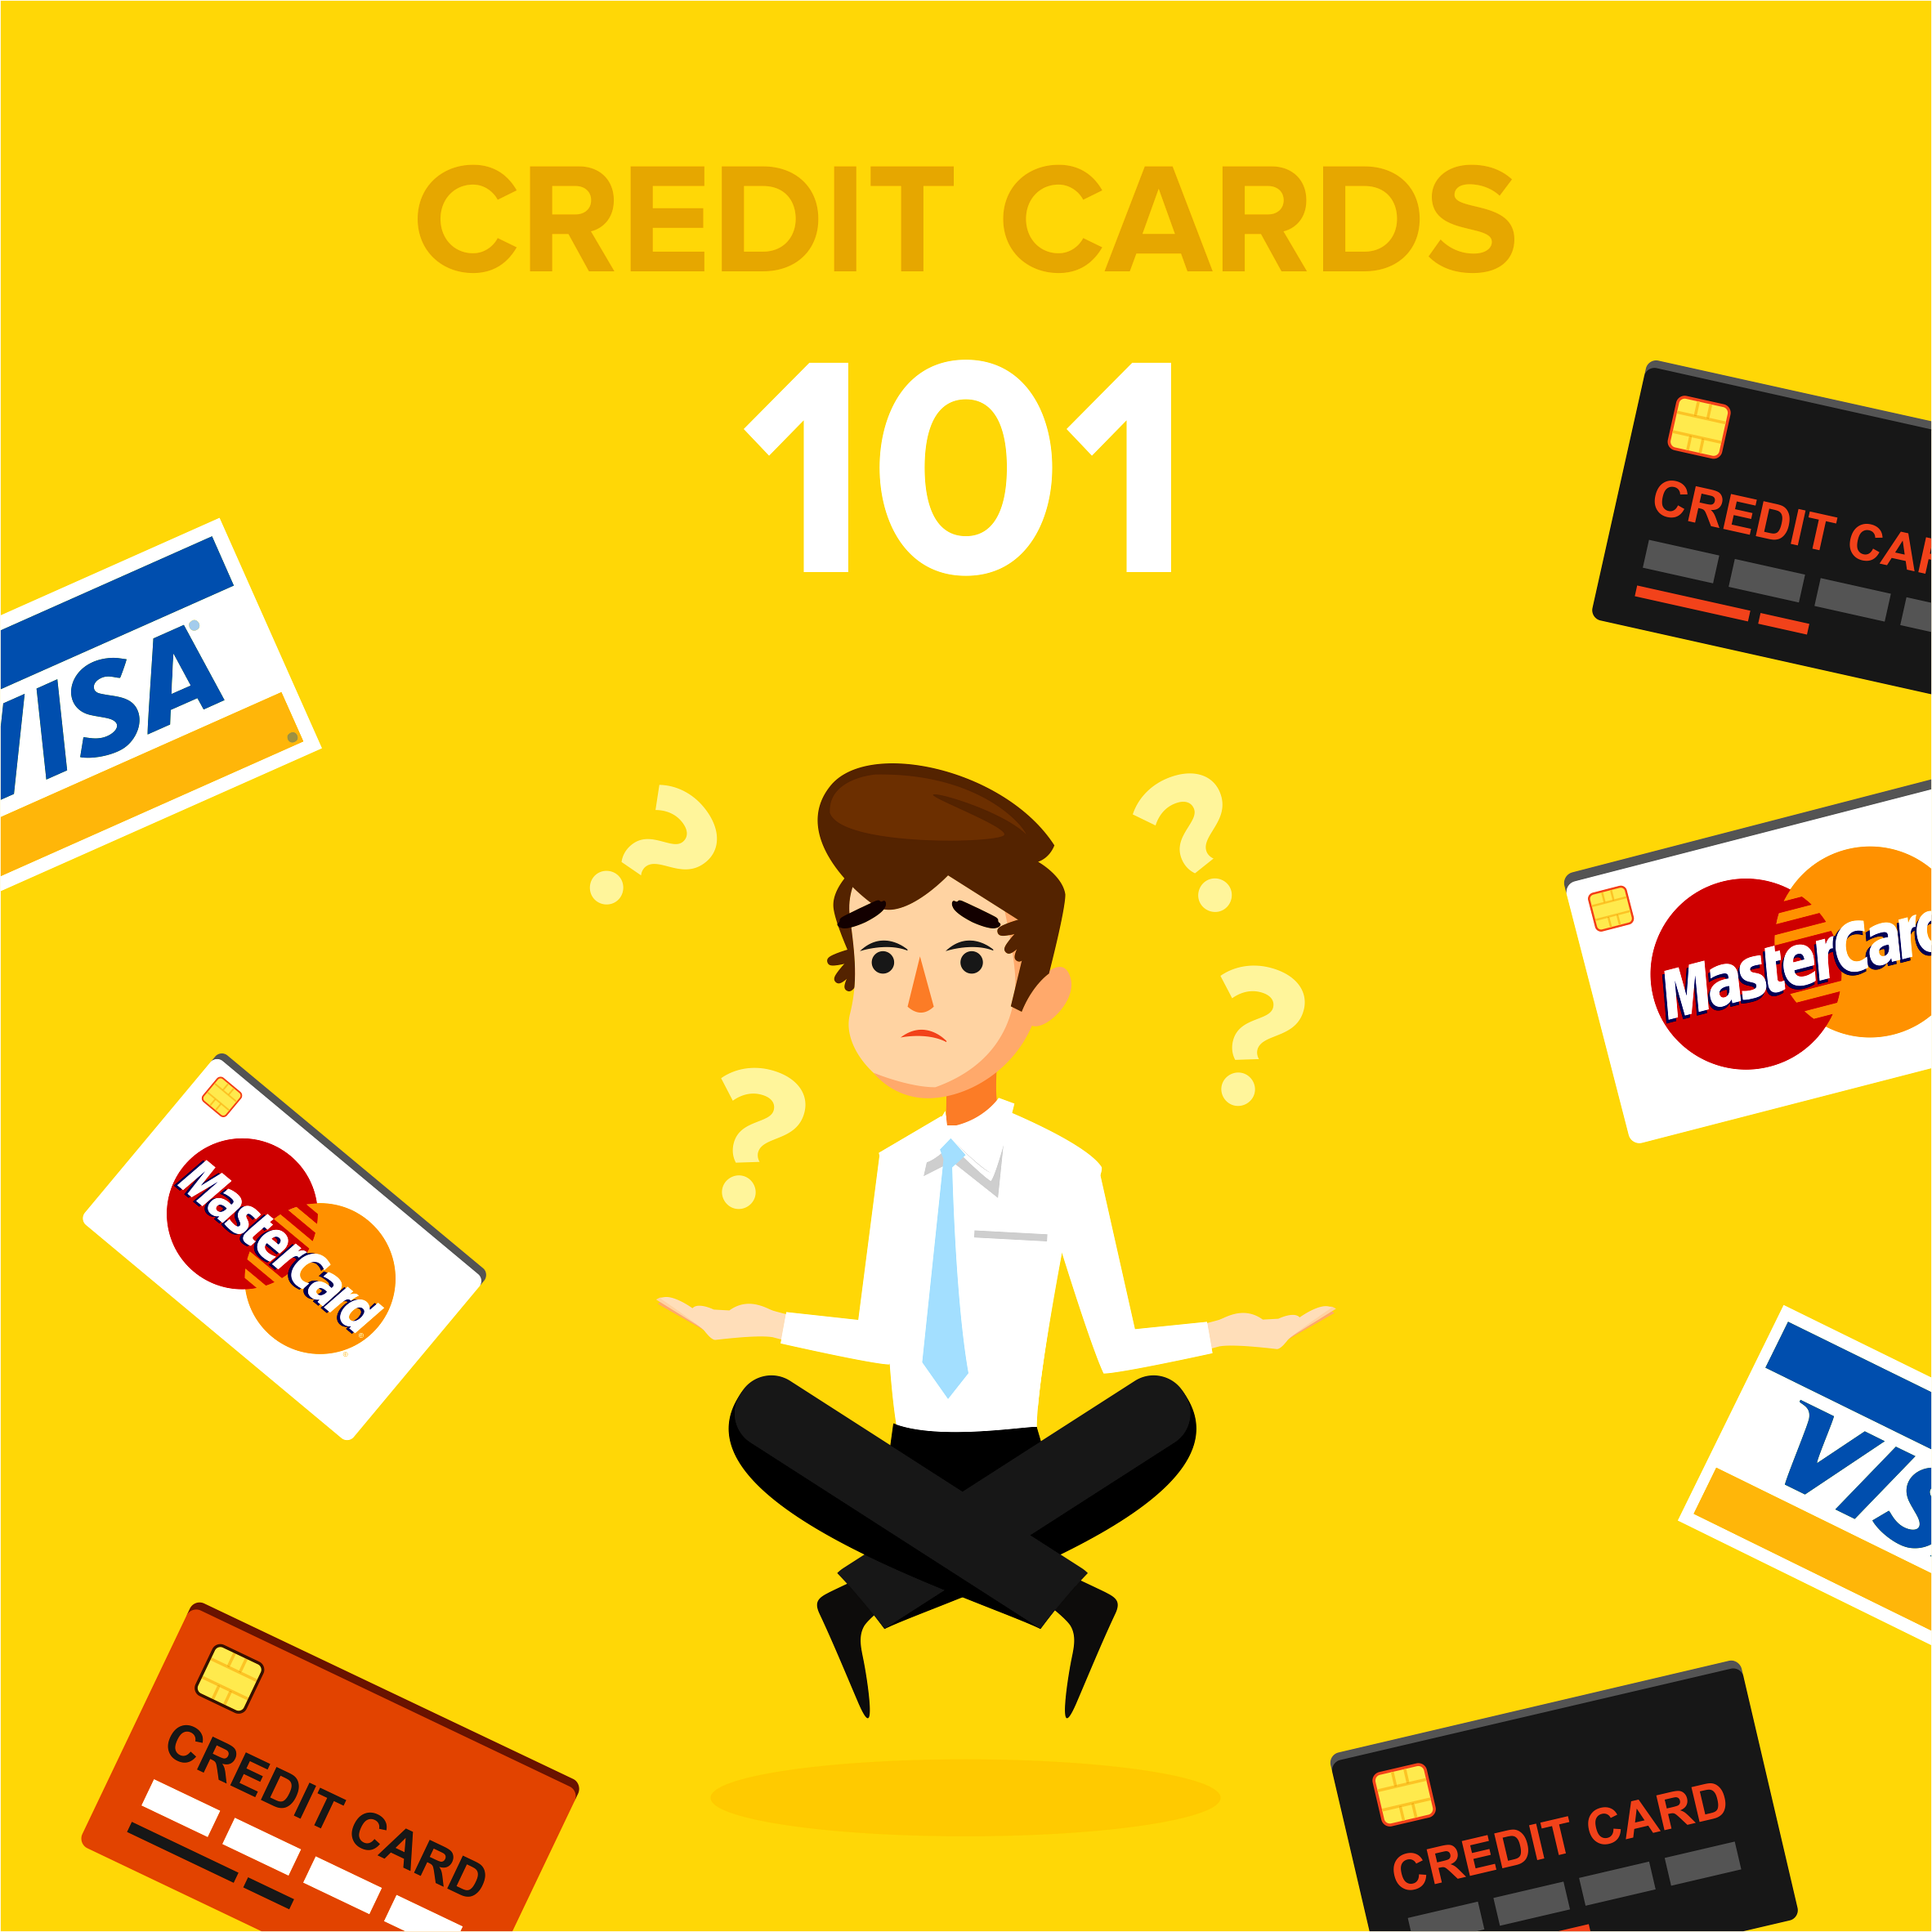 Credit Cards 101